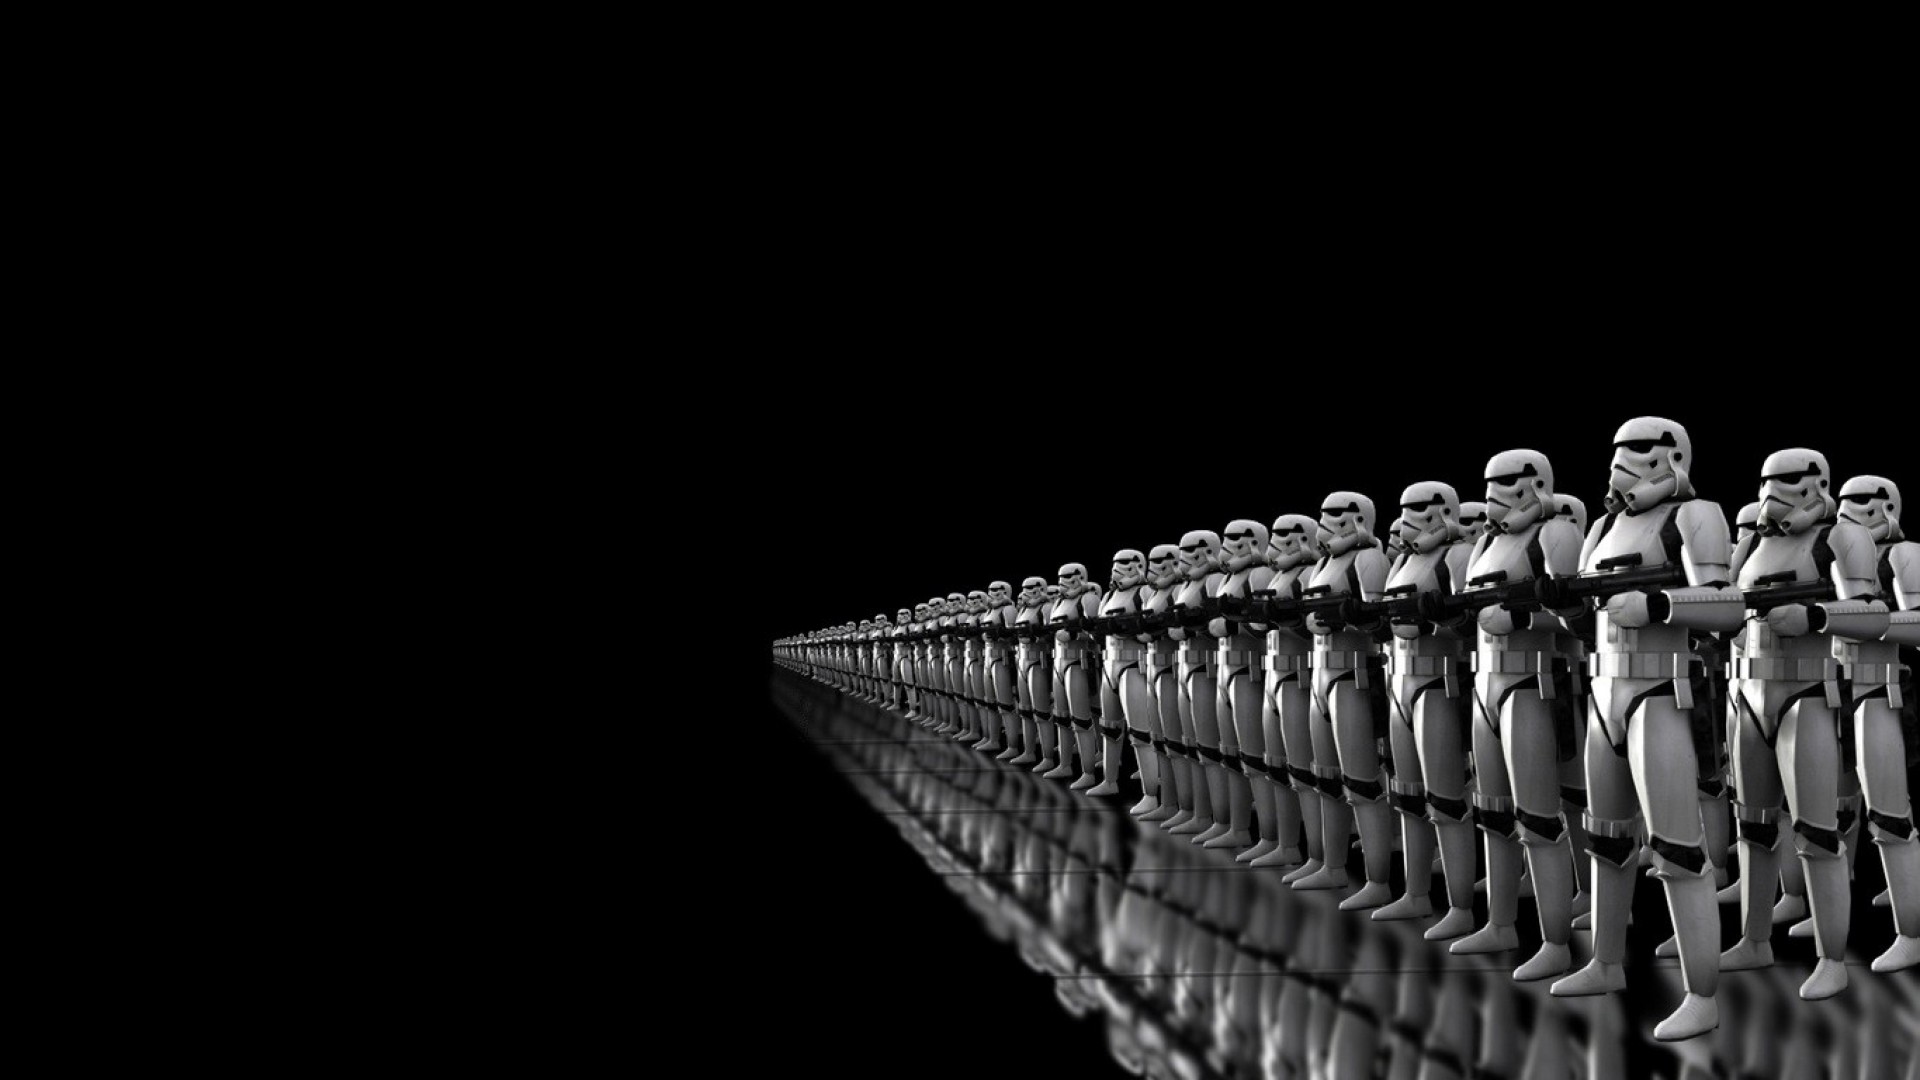 Wars Legion Stormtroopers Galactic Empire Wallpaper